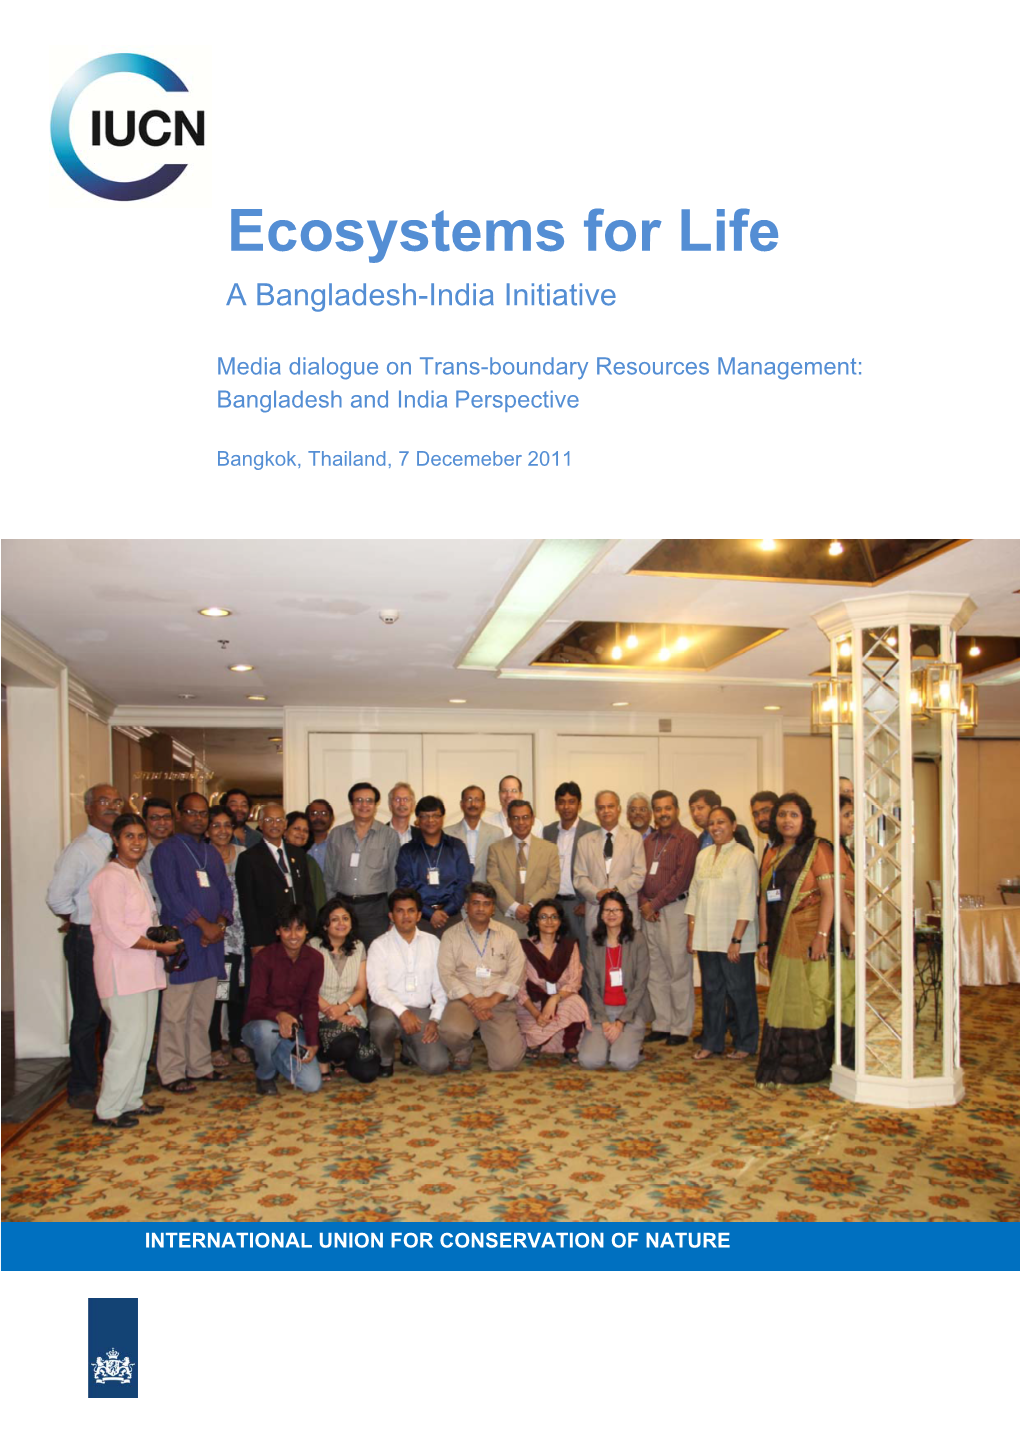 Ecosystems for Life a Bangladesh-India Initiative